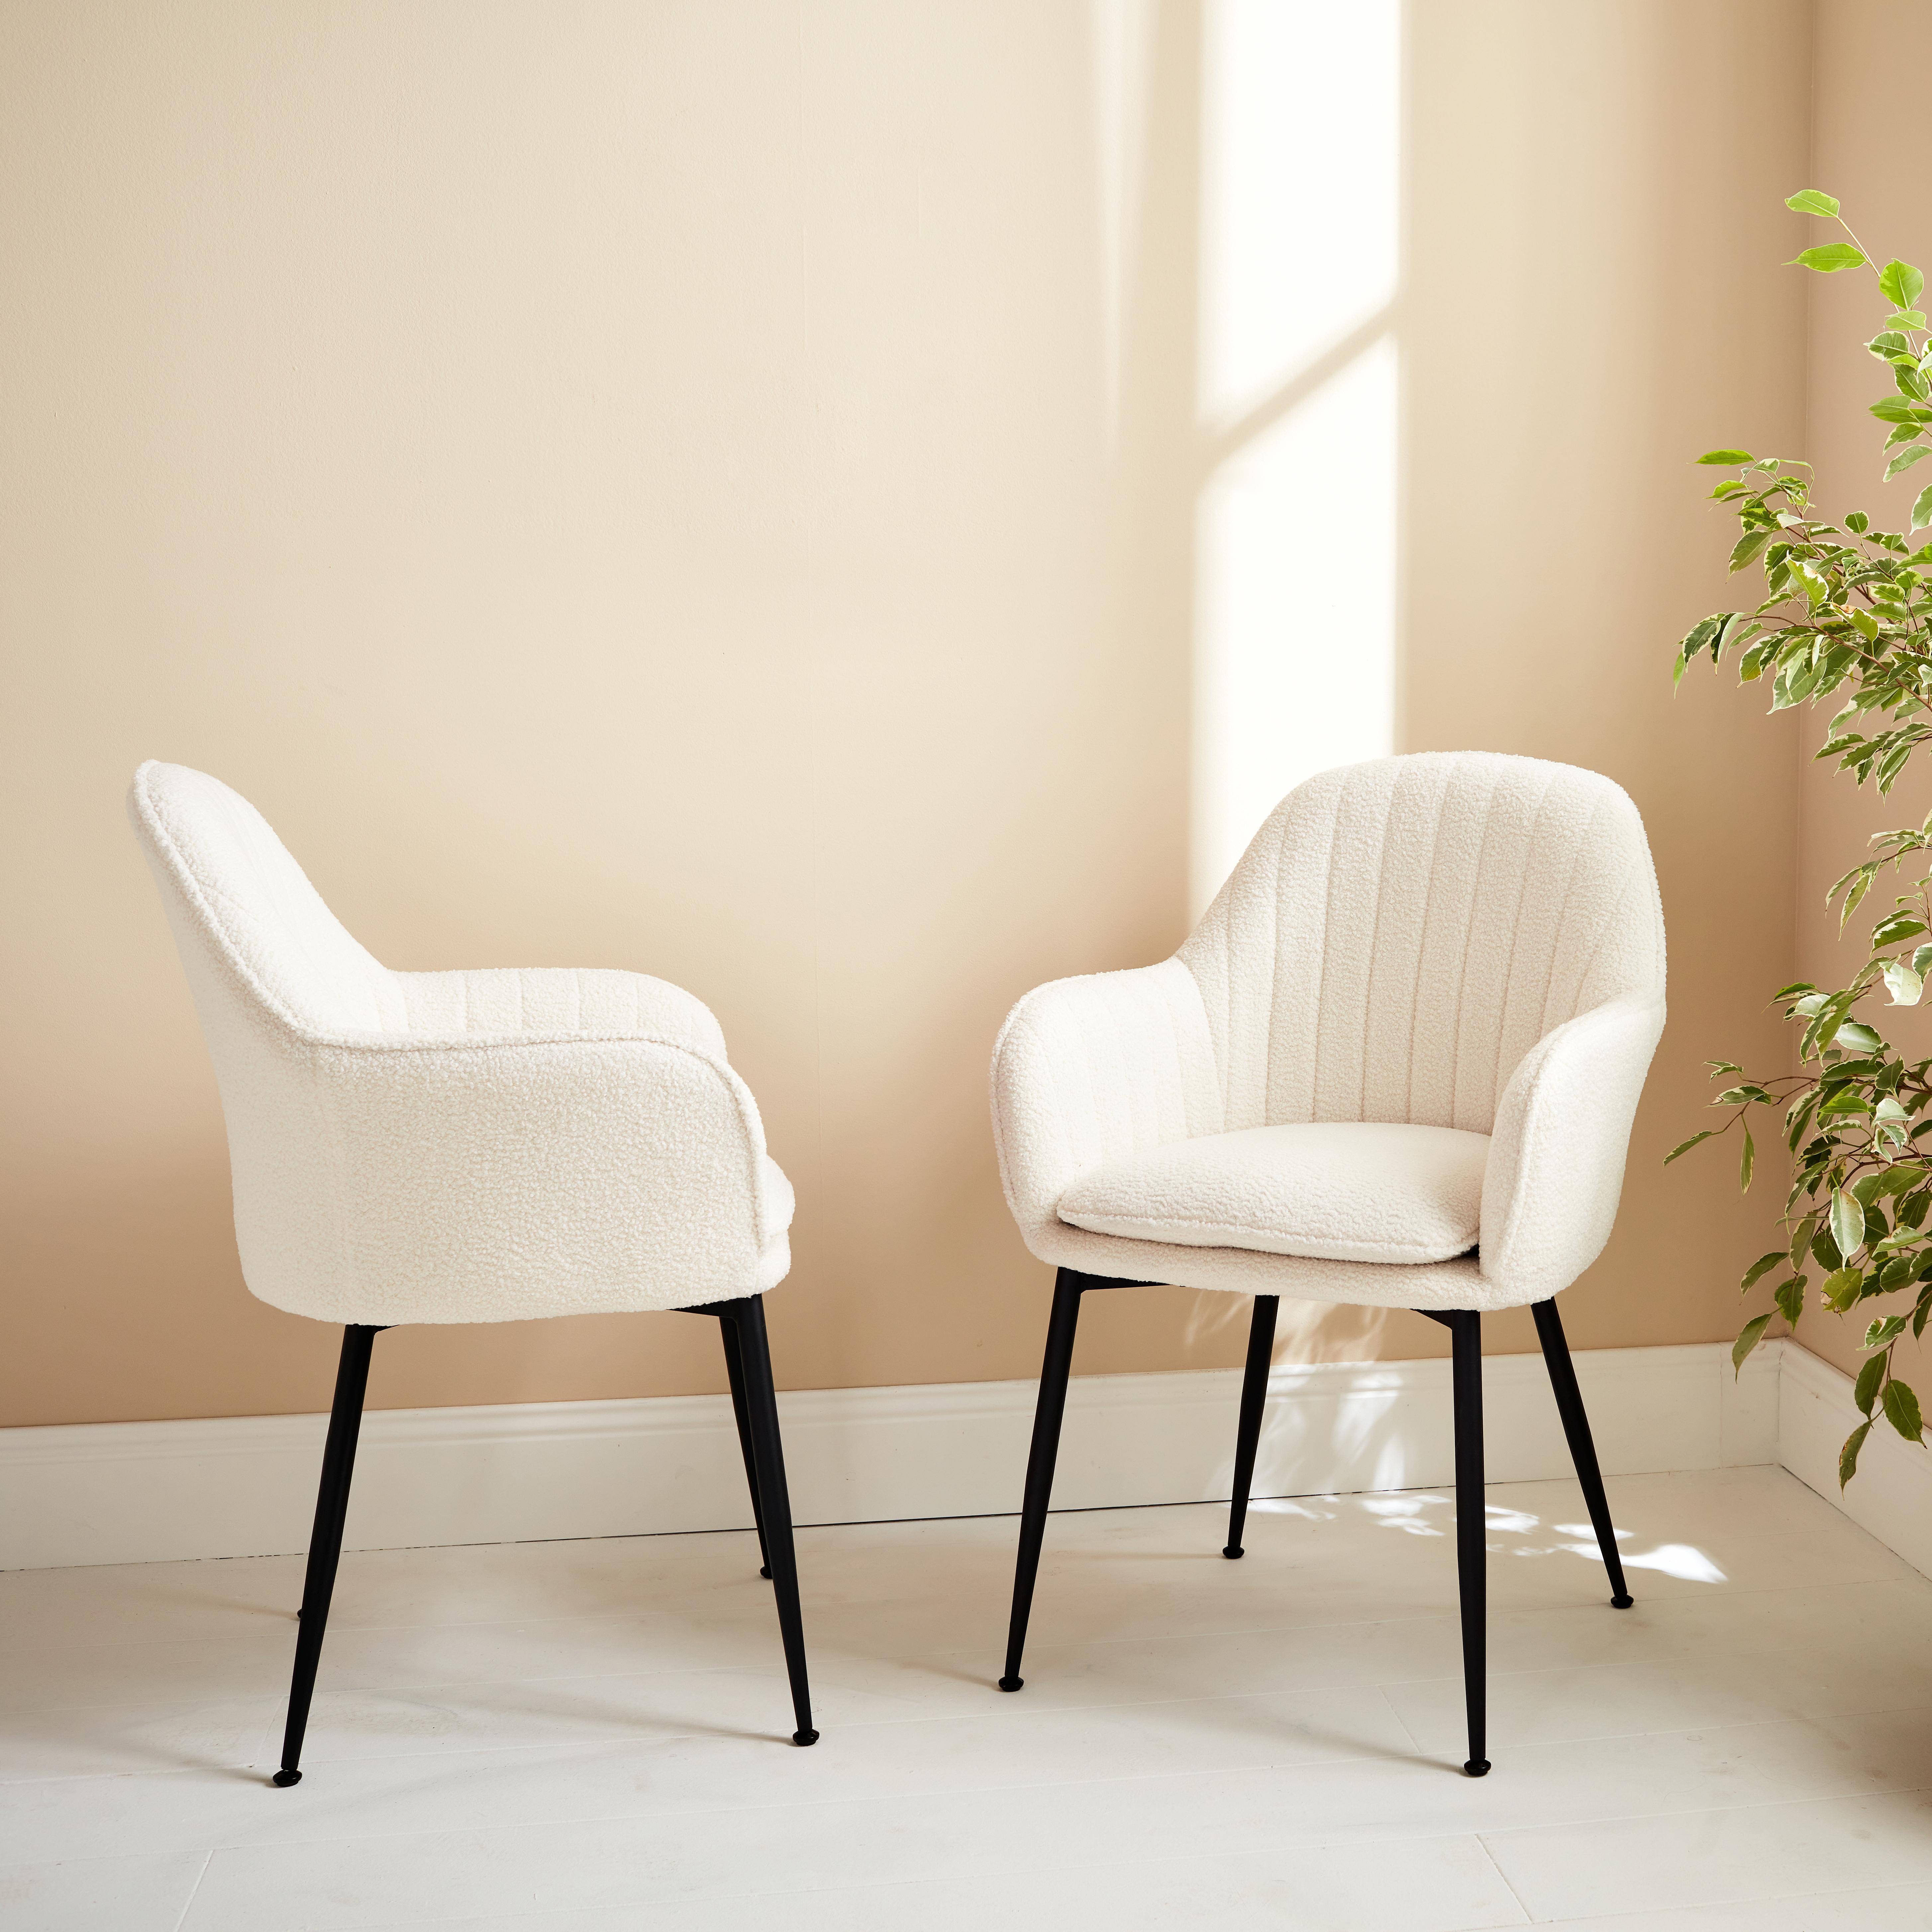 Set of 2 Boucle armchair with metal legs, 58x58x85cm - Shella Boucle - White,sweeek,Photo1